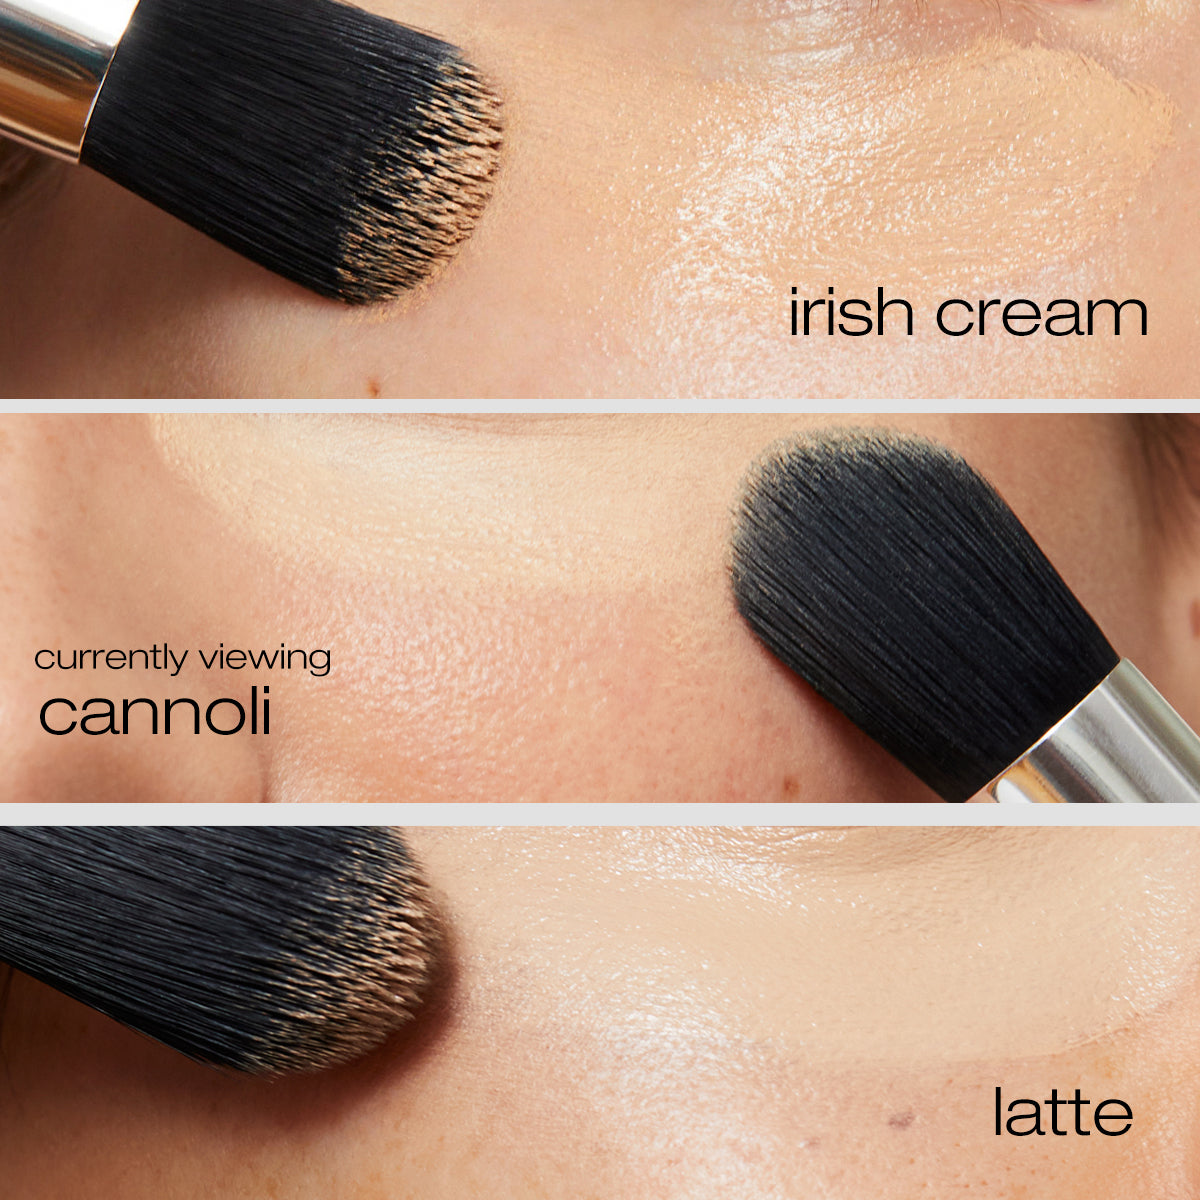 Irish cream, cannoli, and latte concealer refills covering undereyes